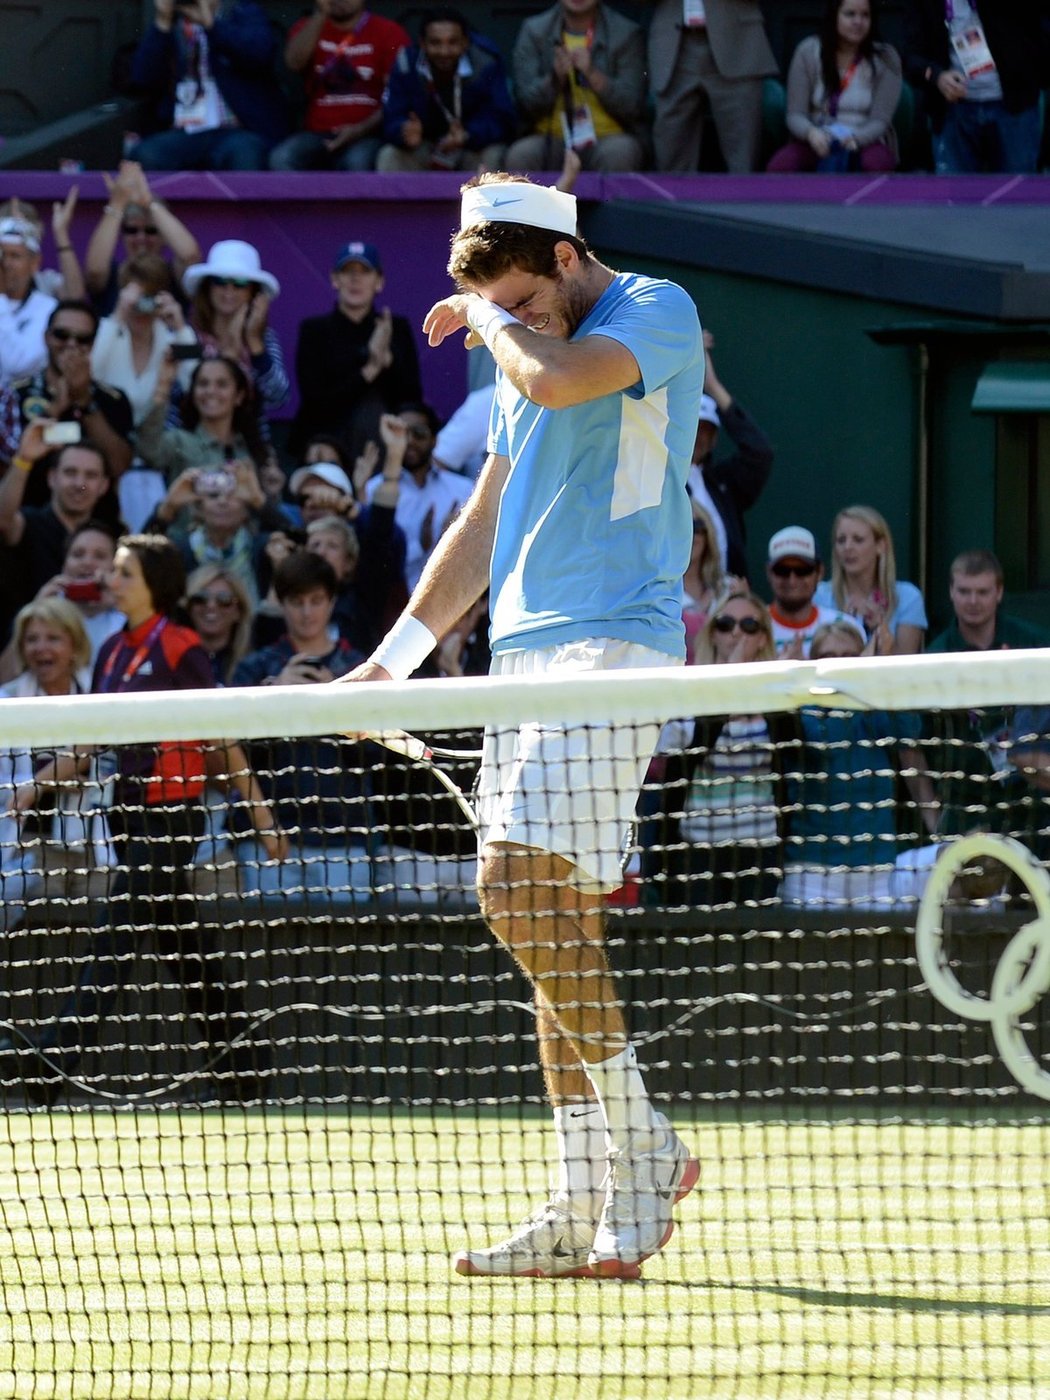 Zničený Juan Martin del Potro po prohraném semifinále s Federerem